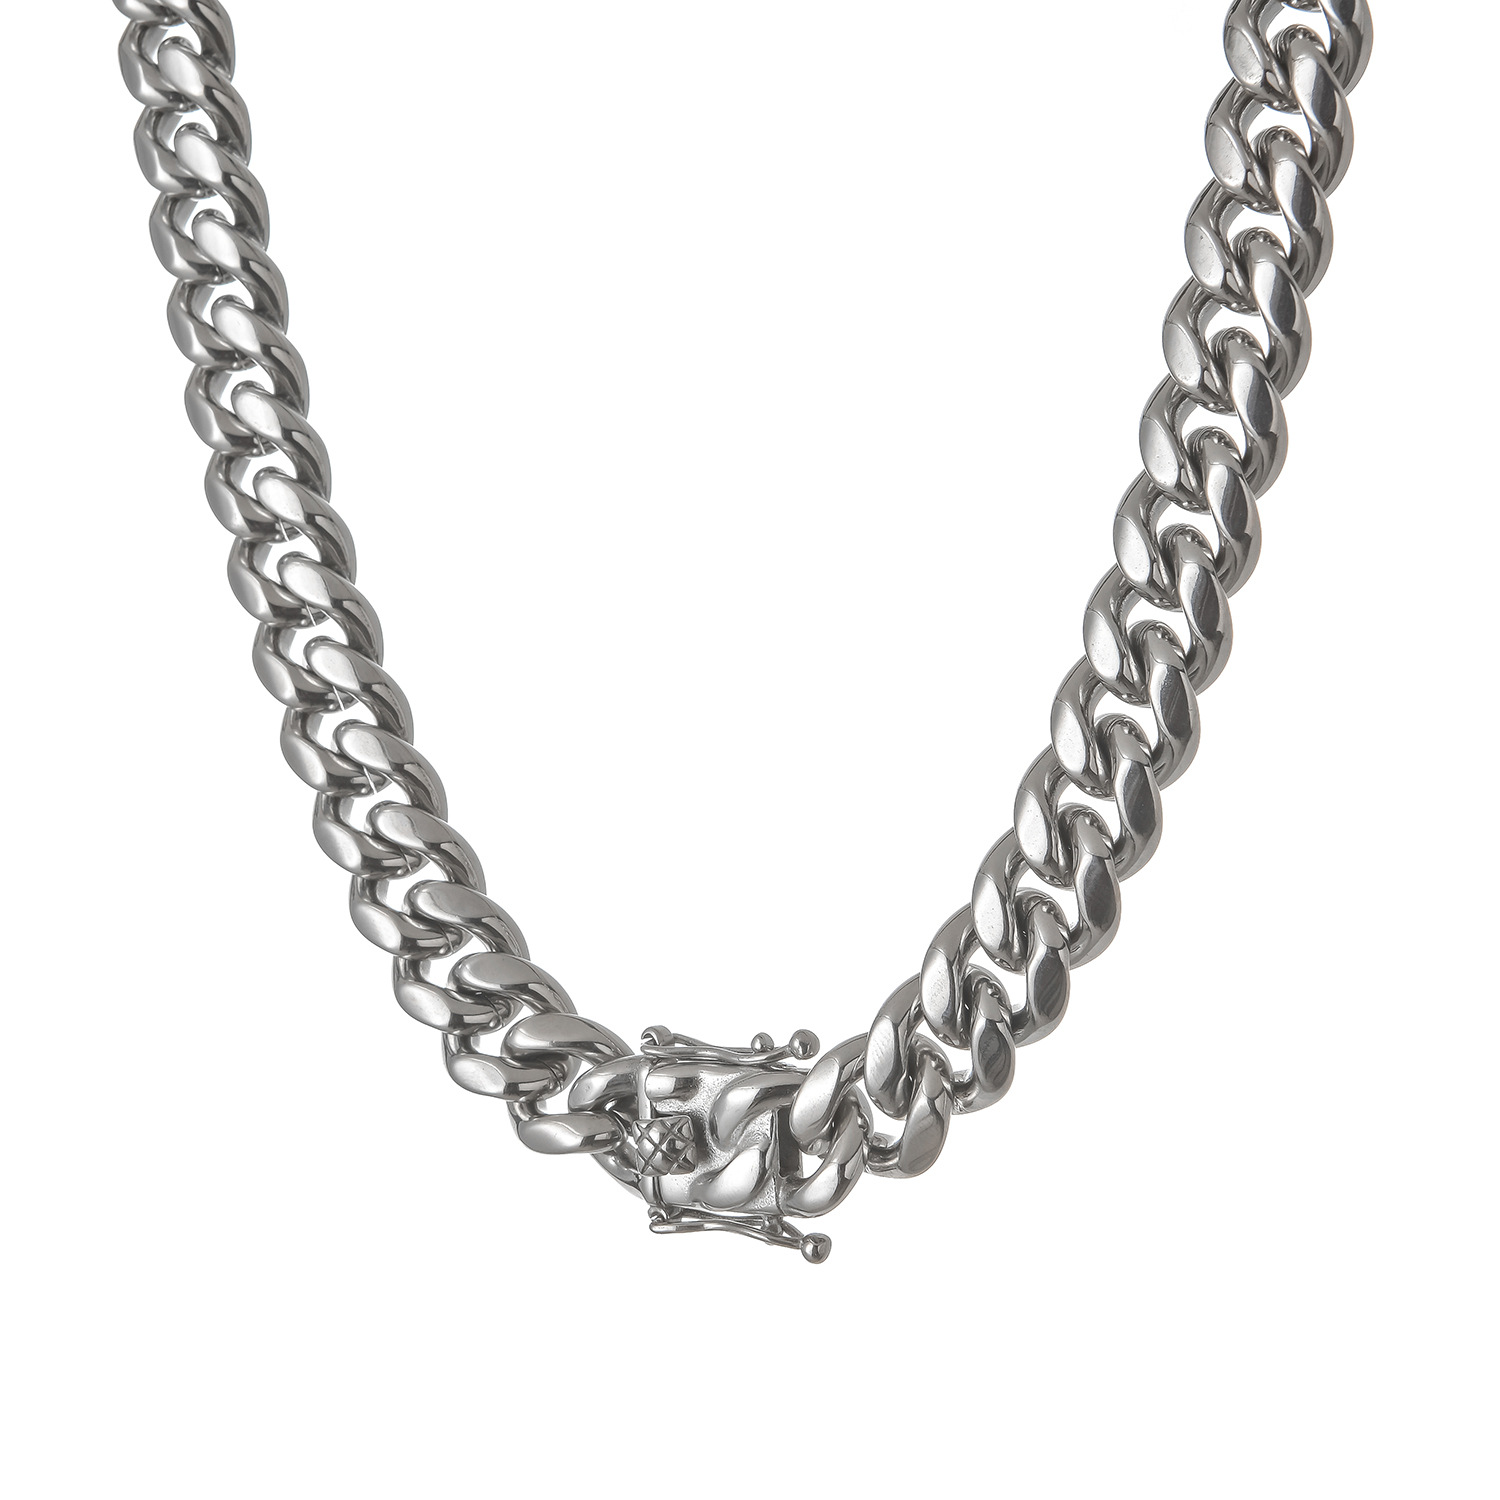 6:Necklace Steel Color 14mm*60cm